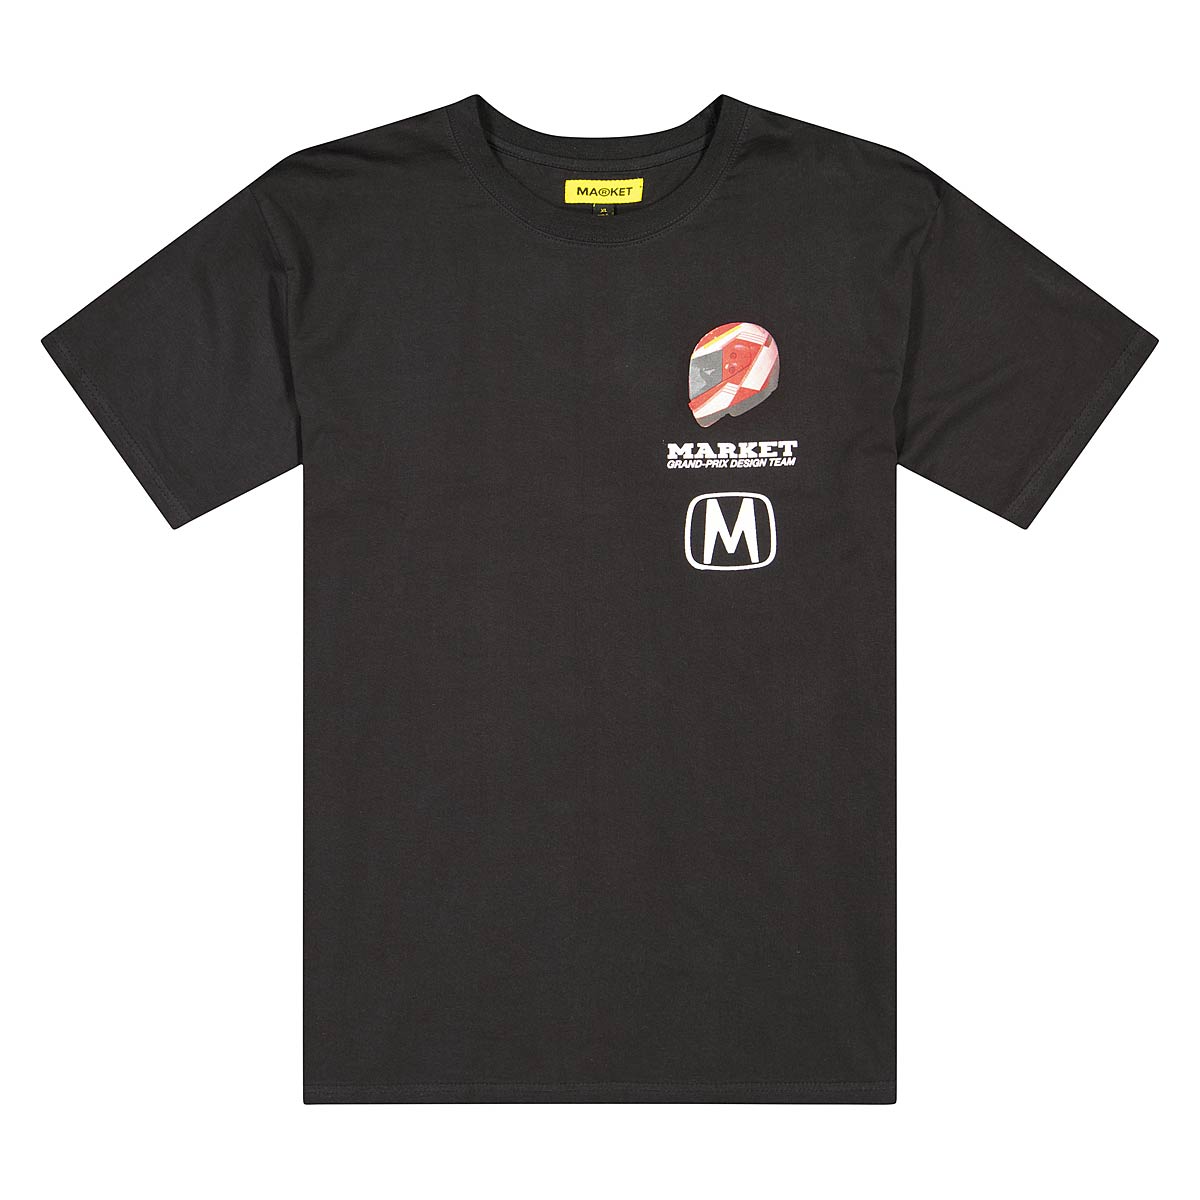 Market Grand Prix T-Shirt, Black